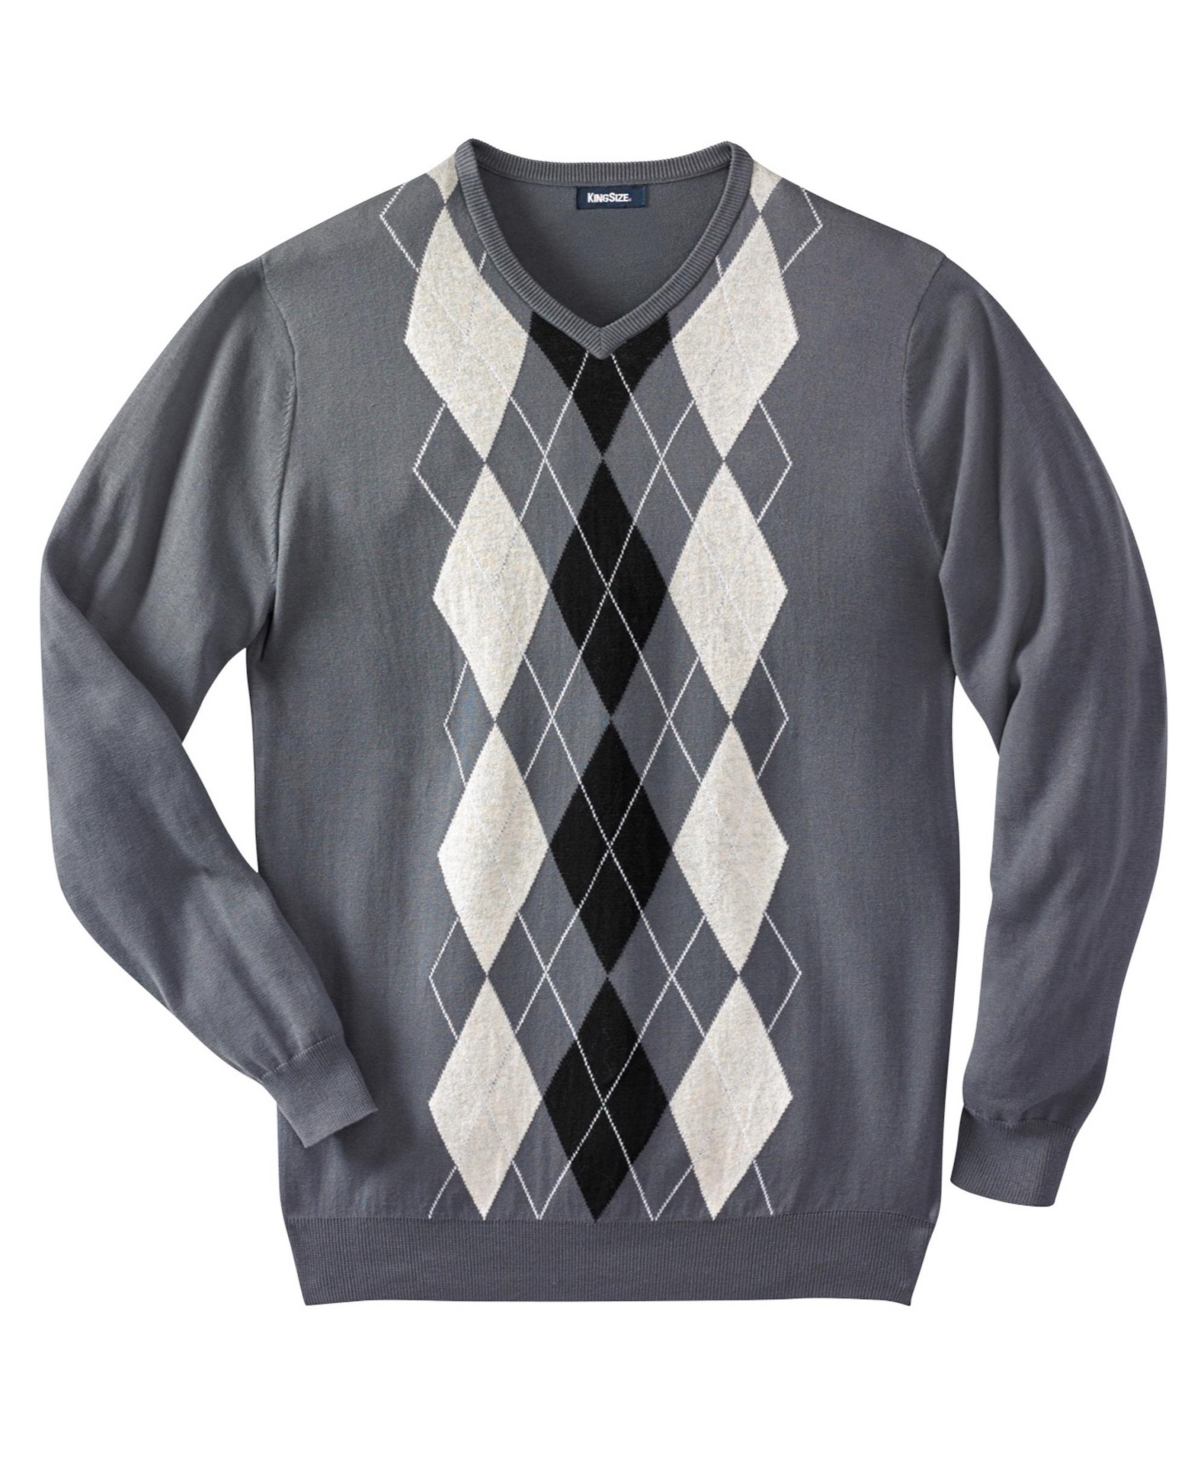 Big & Tall V-Neck Argyle Sweater - Steel argyle